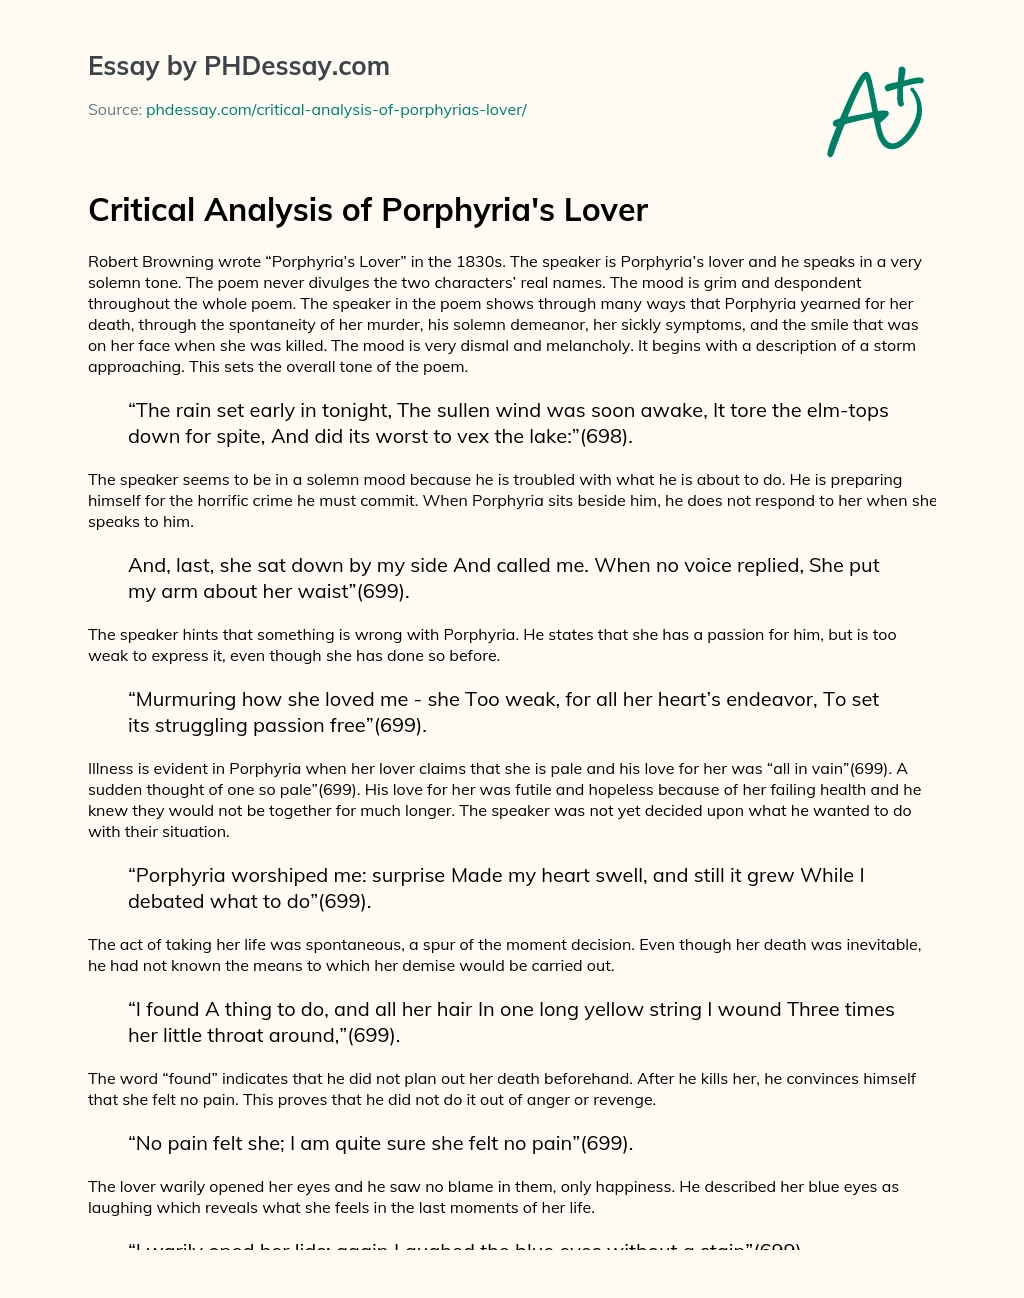 Critical Analysis of Porphyria’s Lover essay